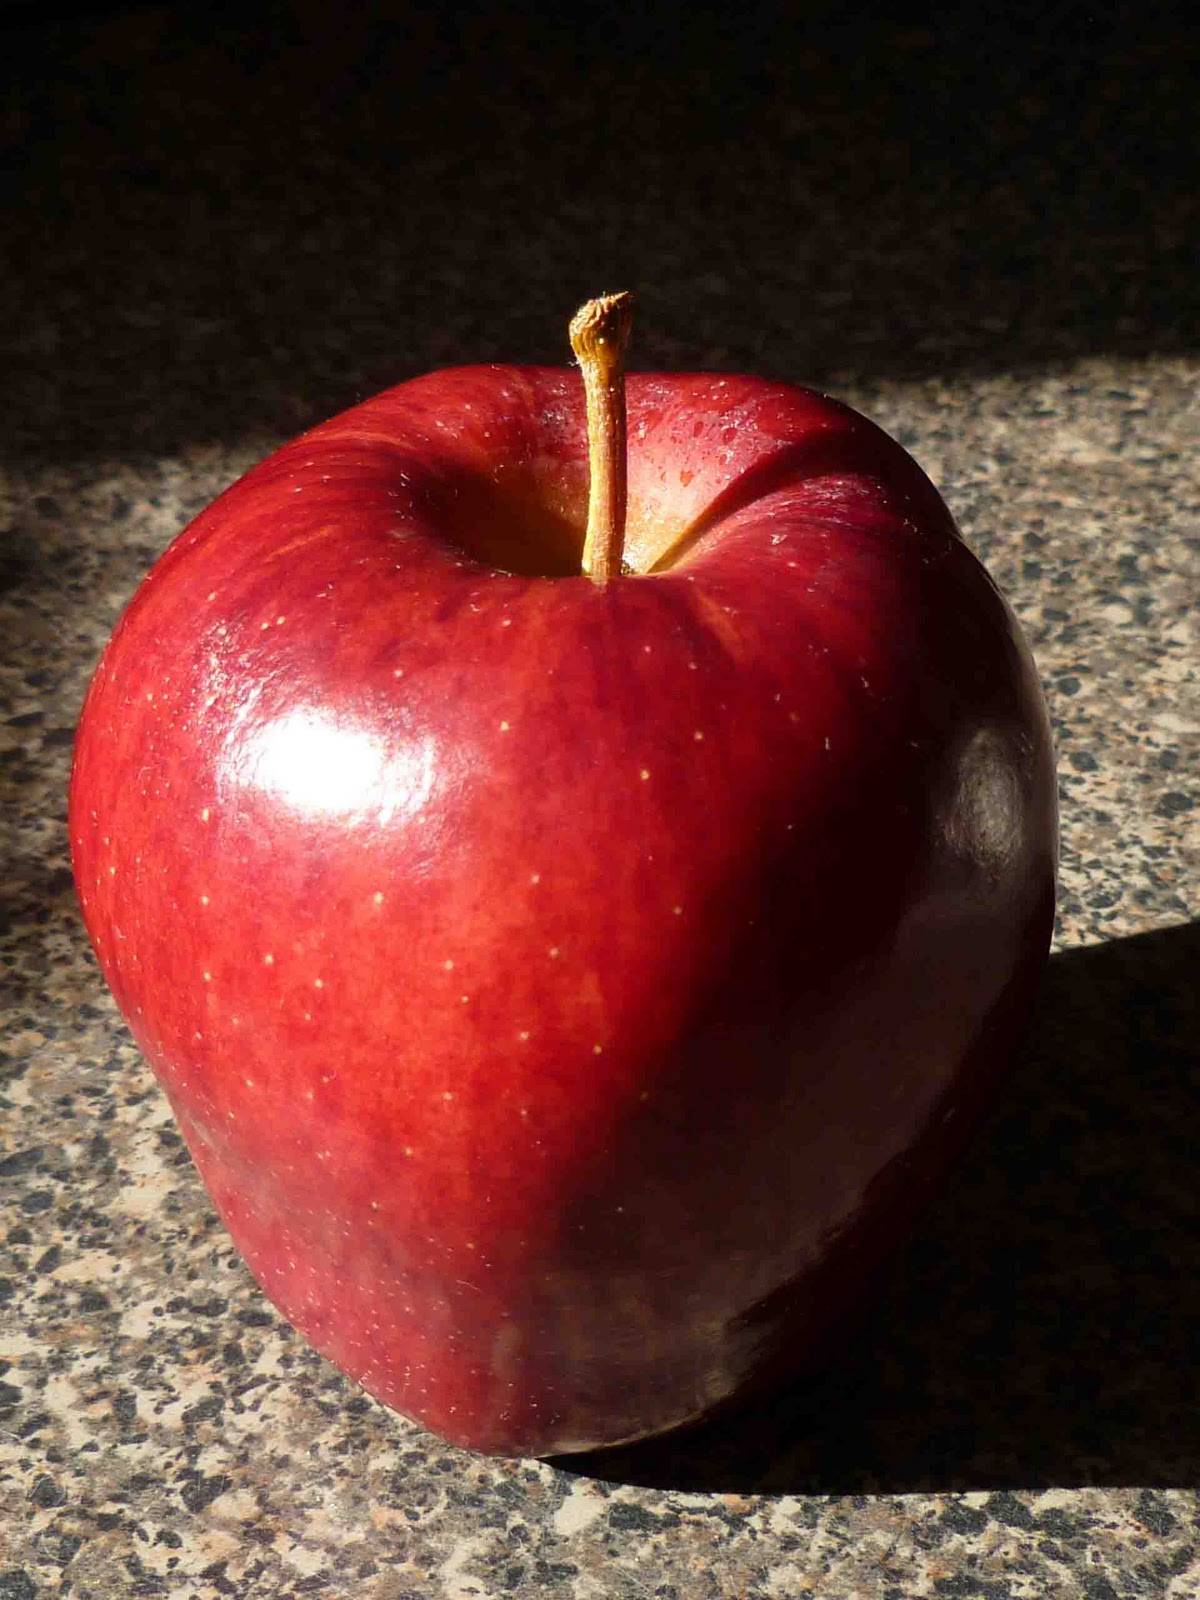 Ред делишес — описание сорта яблони и правила агротехники